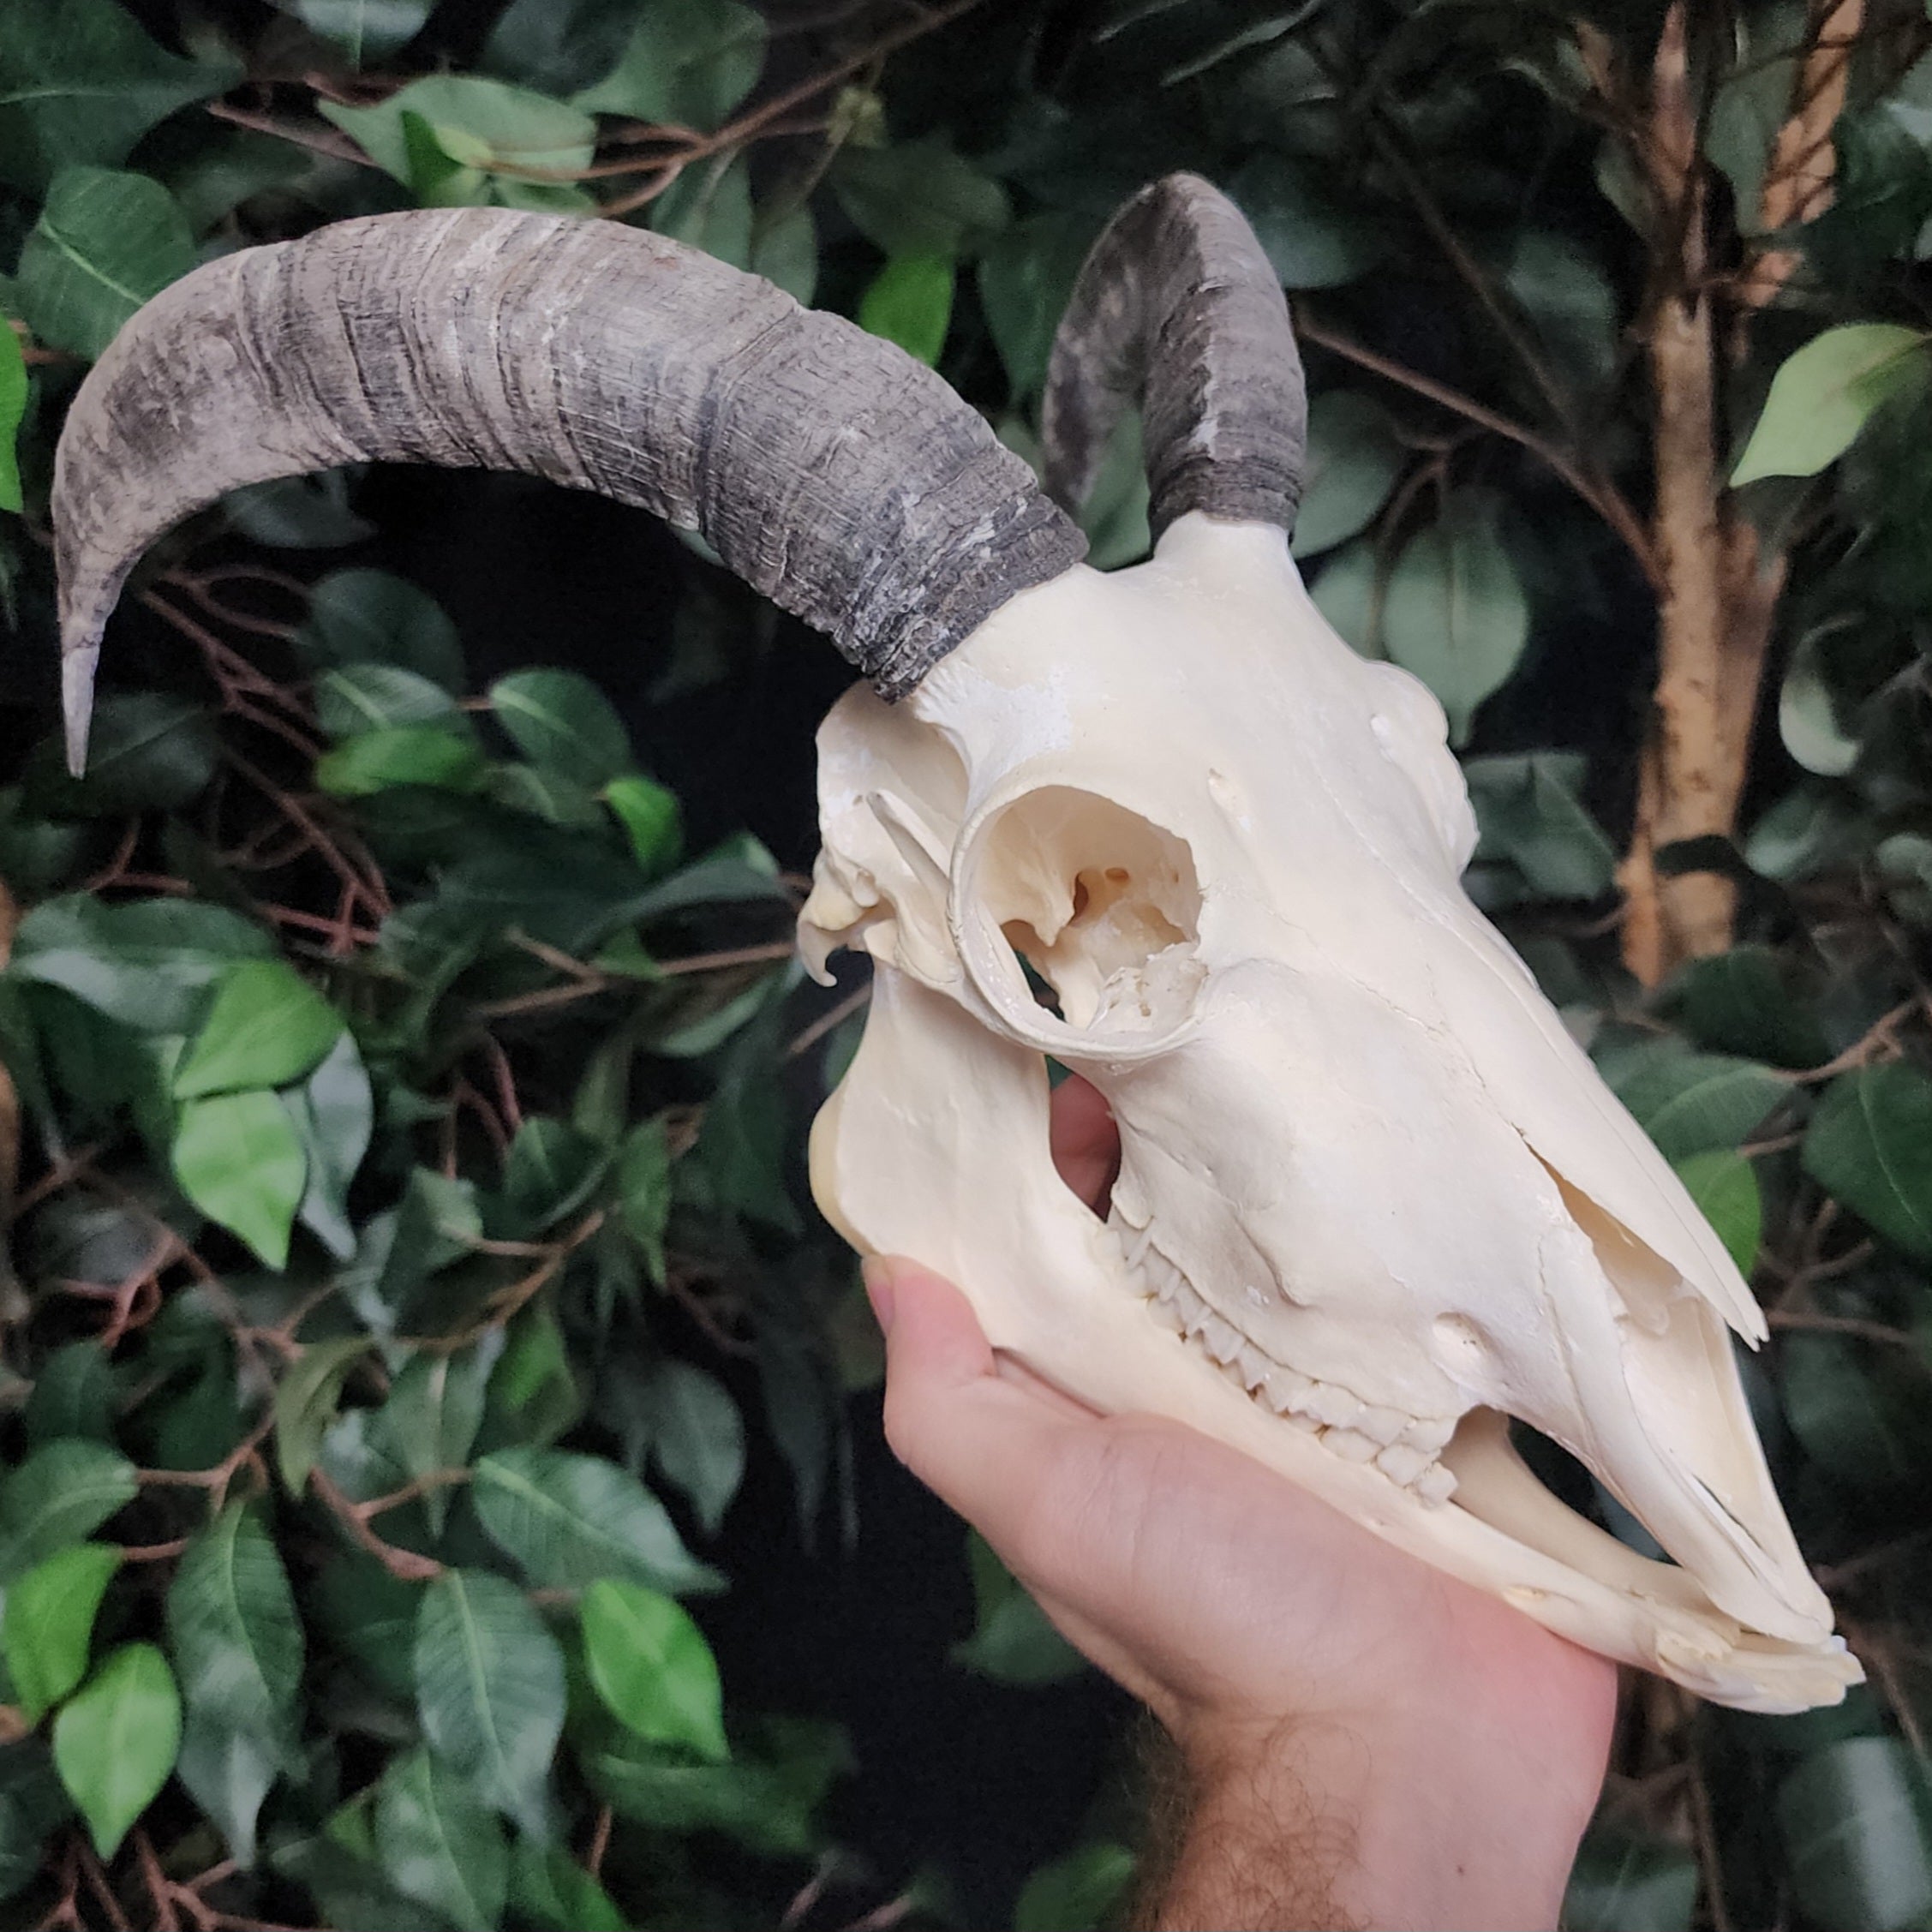 domestic goat skull